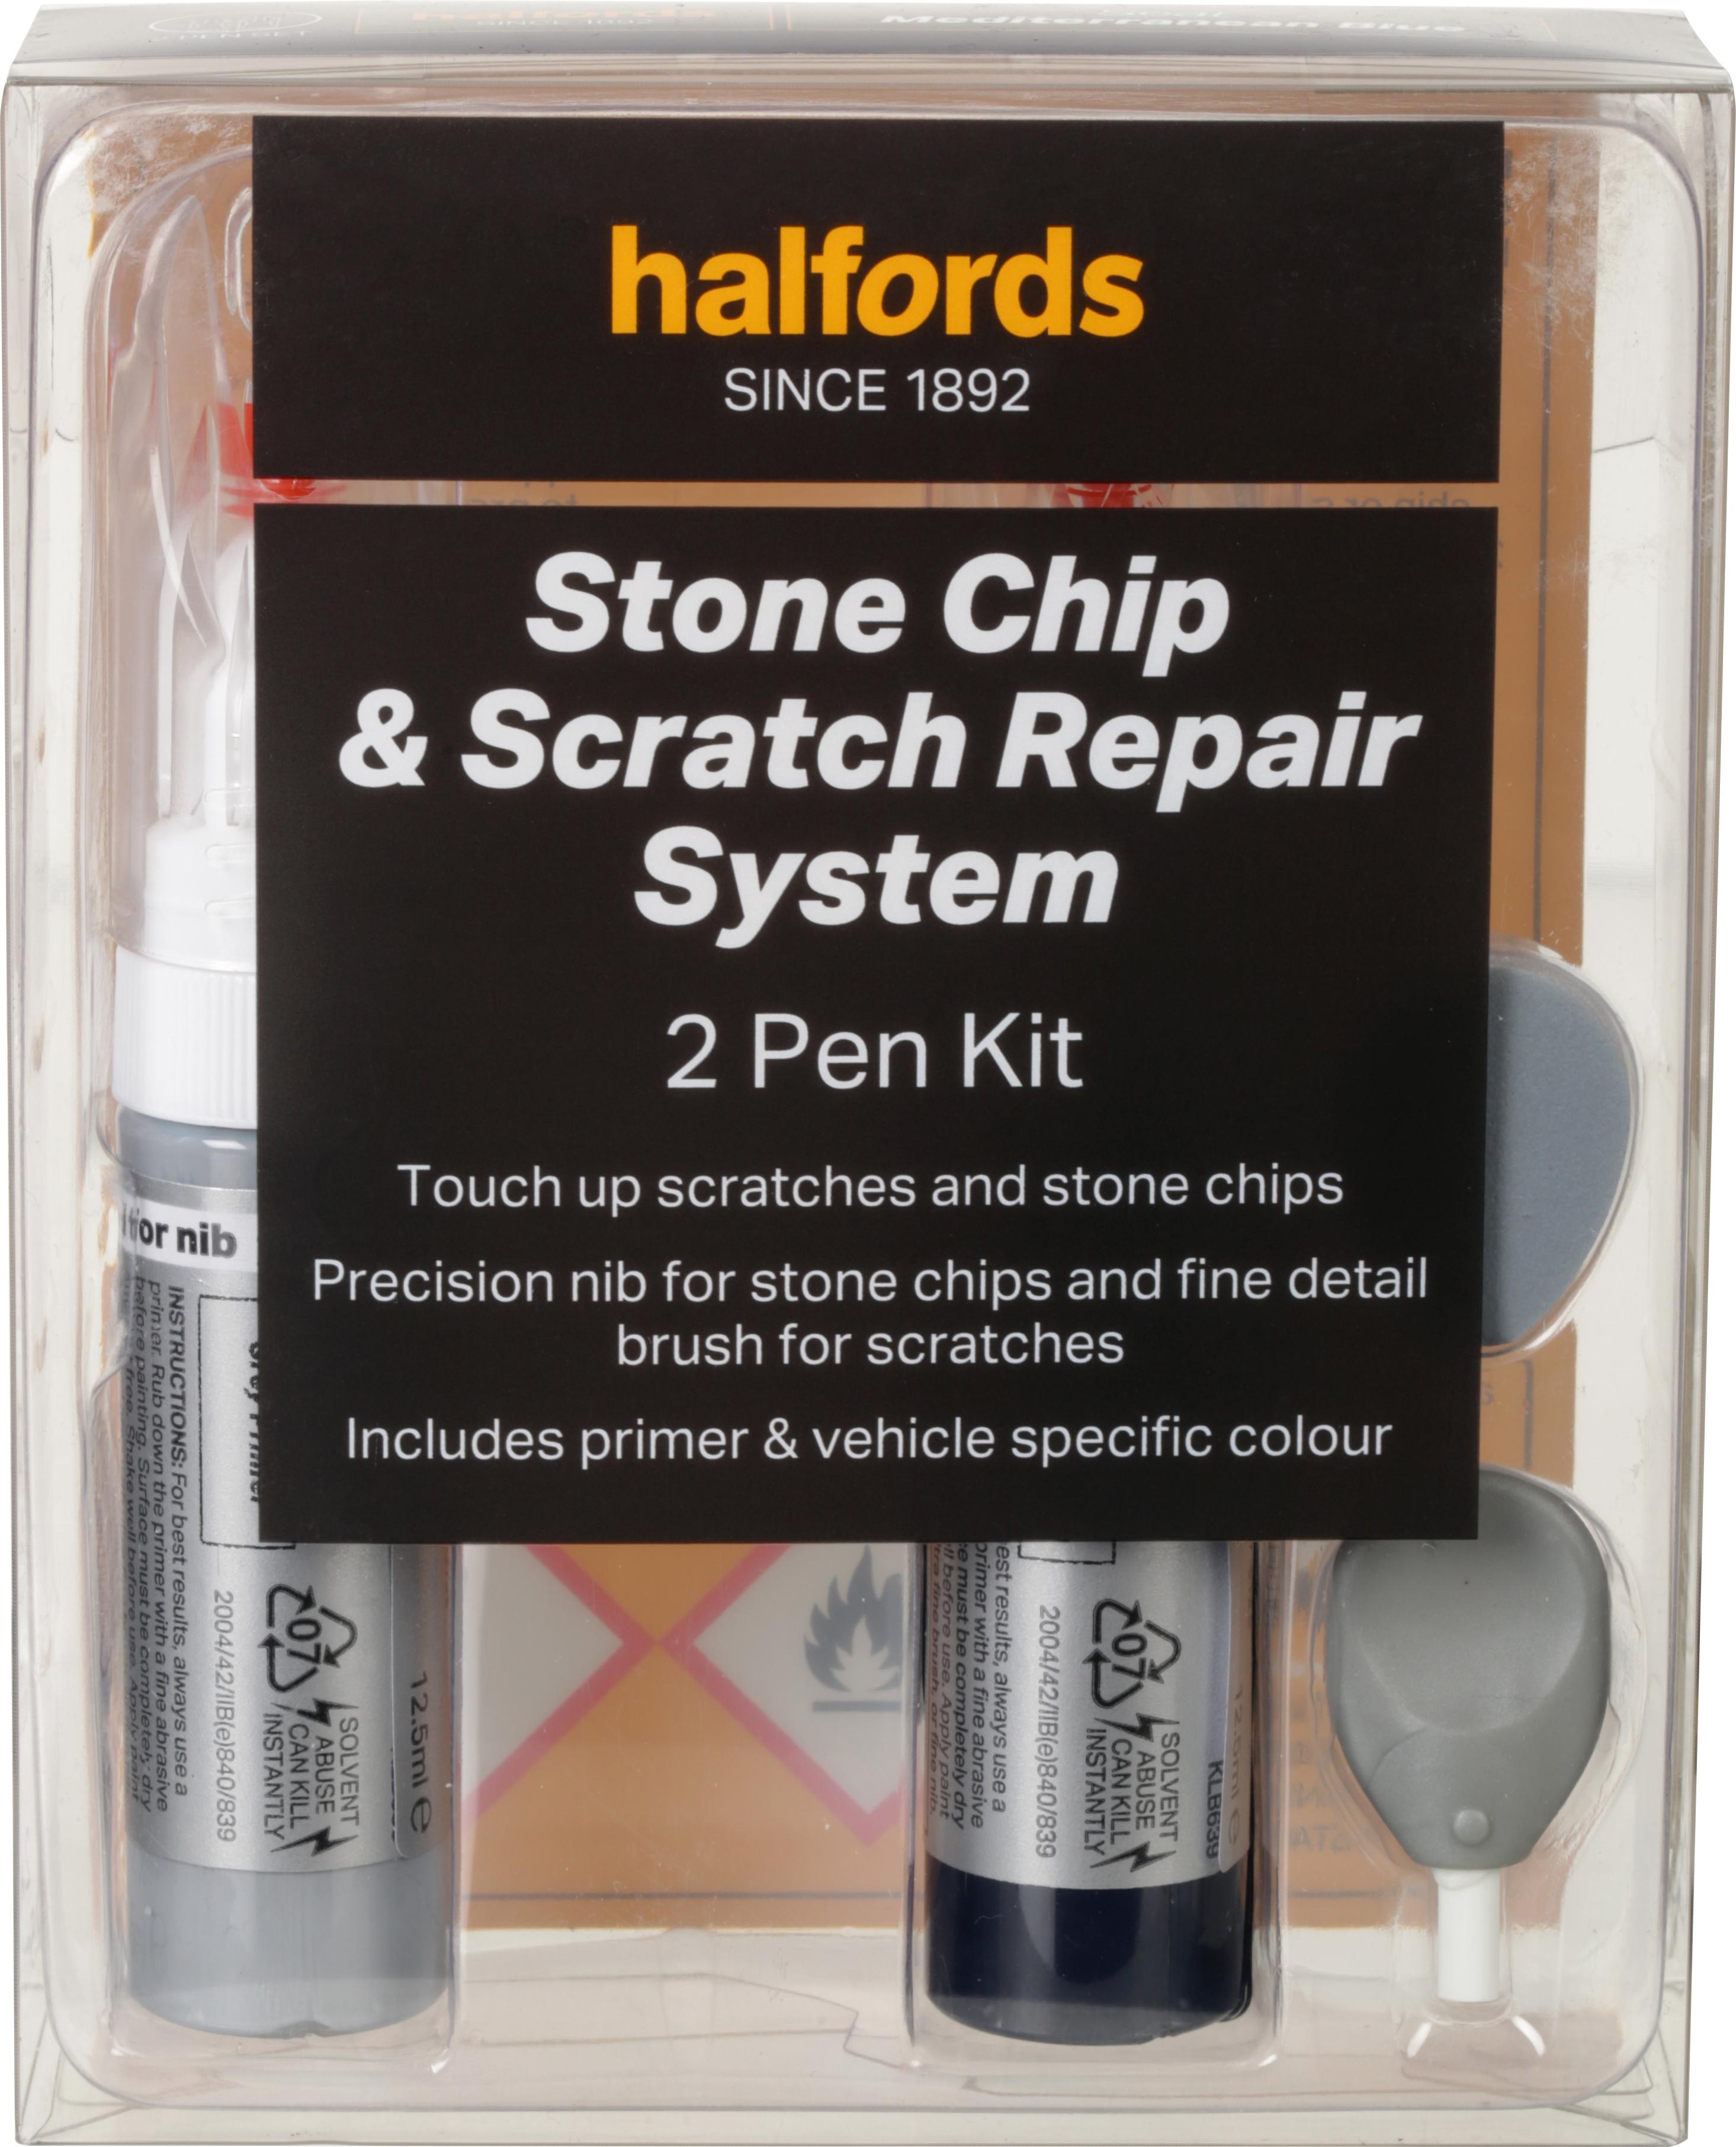 Halfords Nissan Nero Black Scratch & Chip Repair Kit